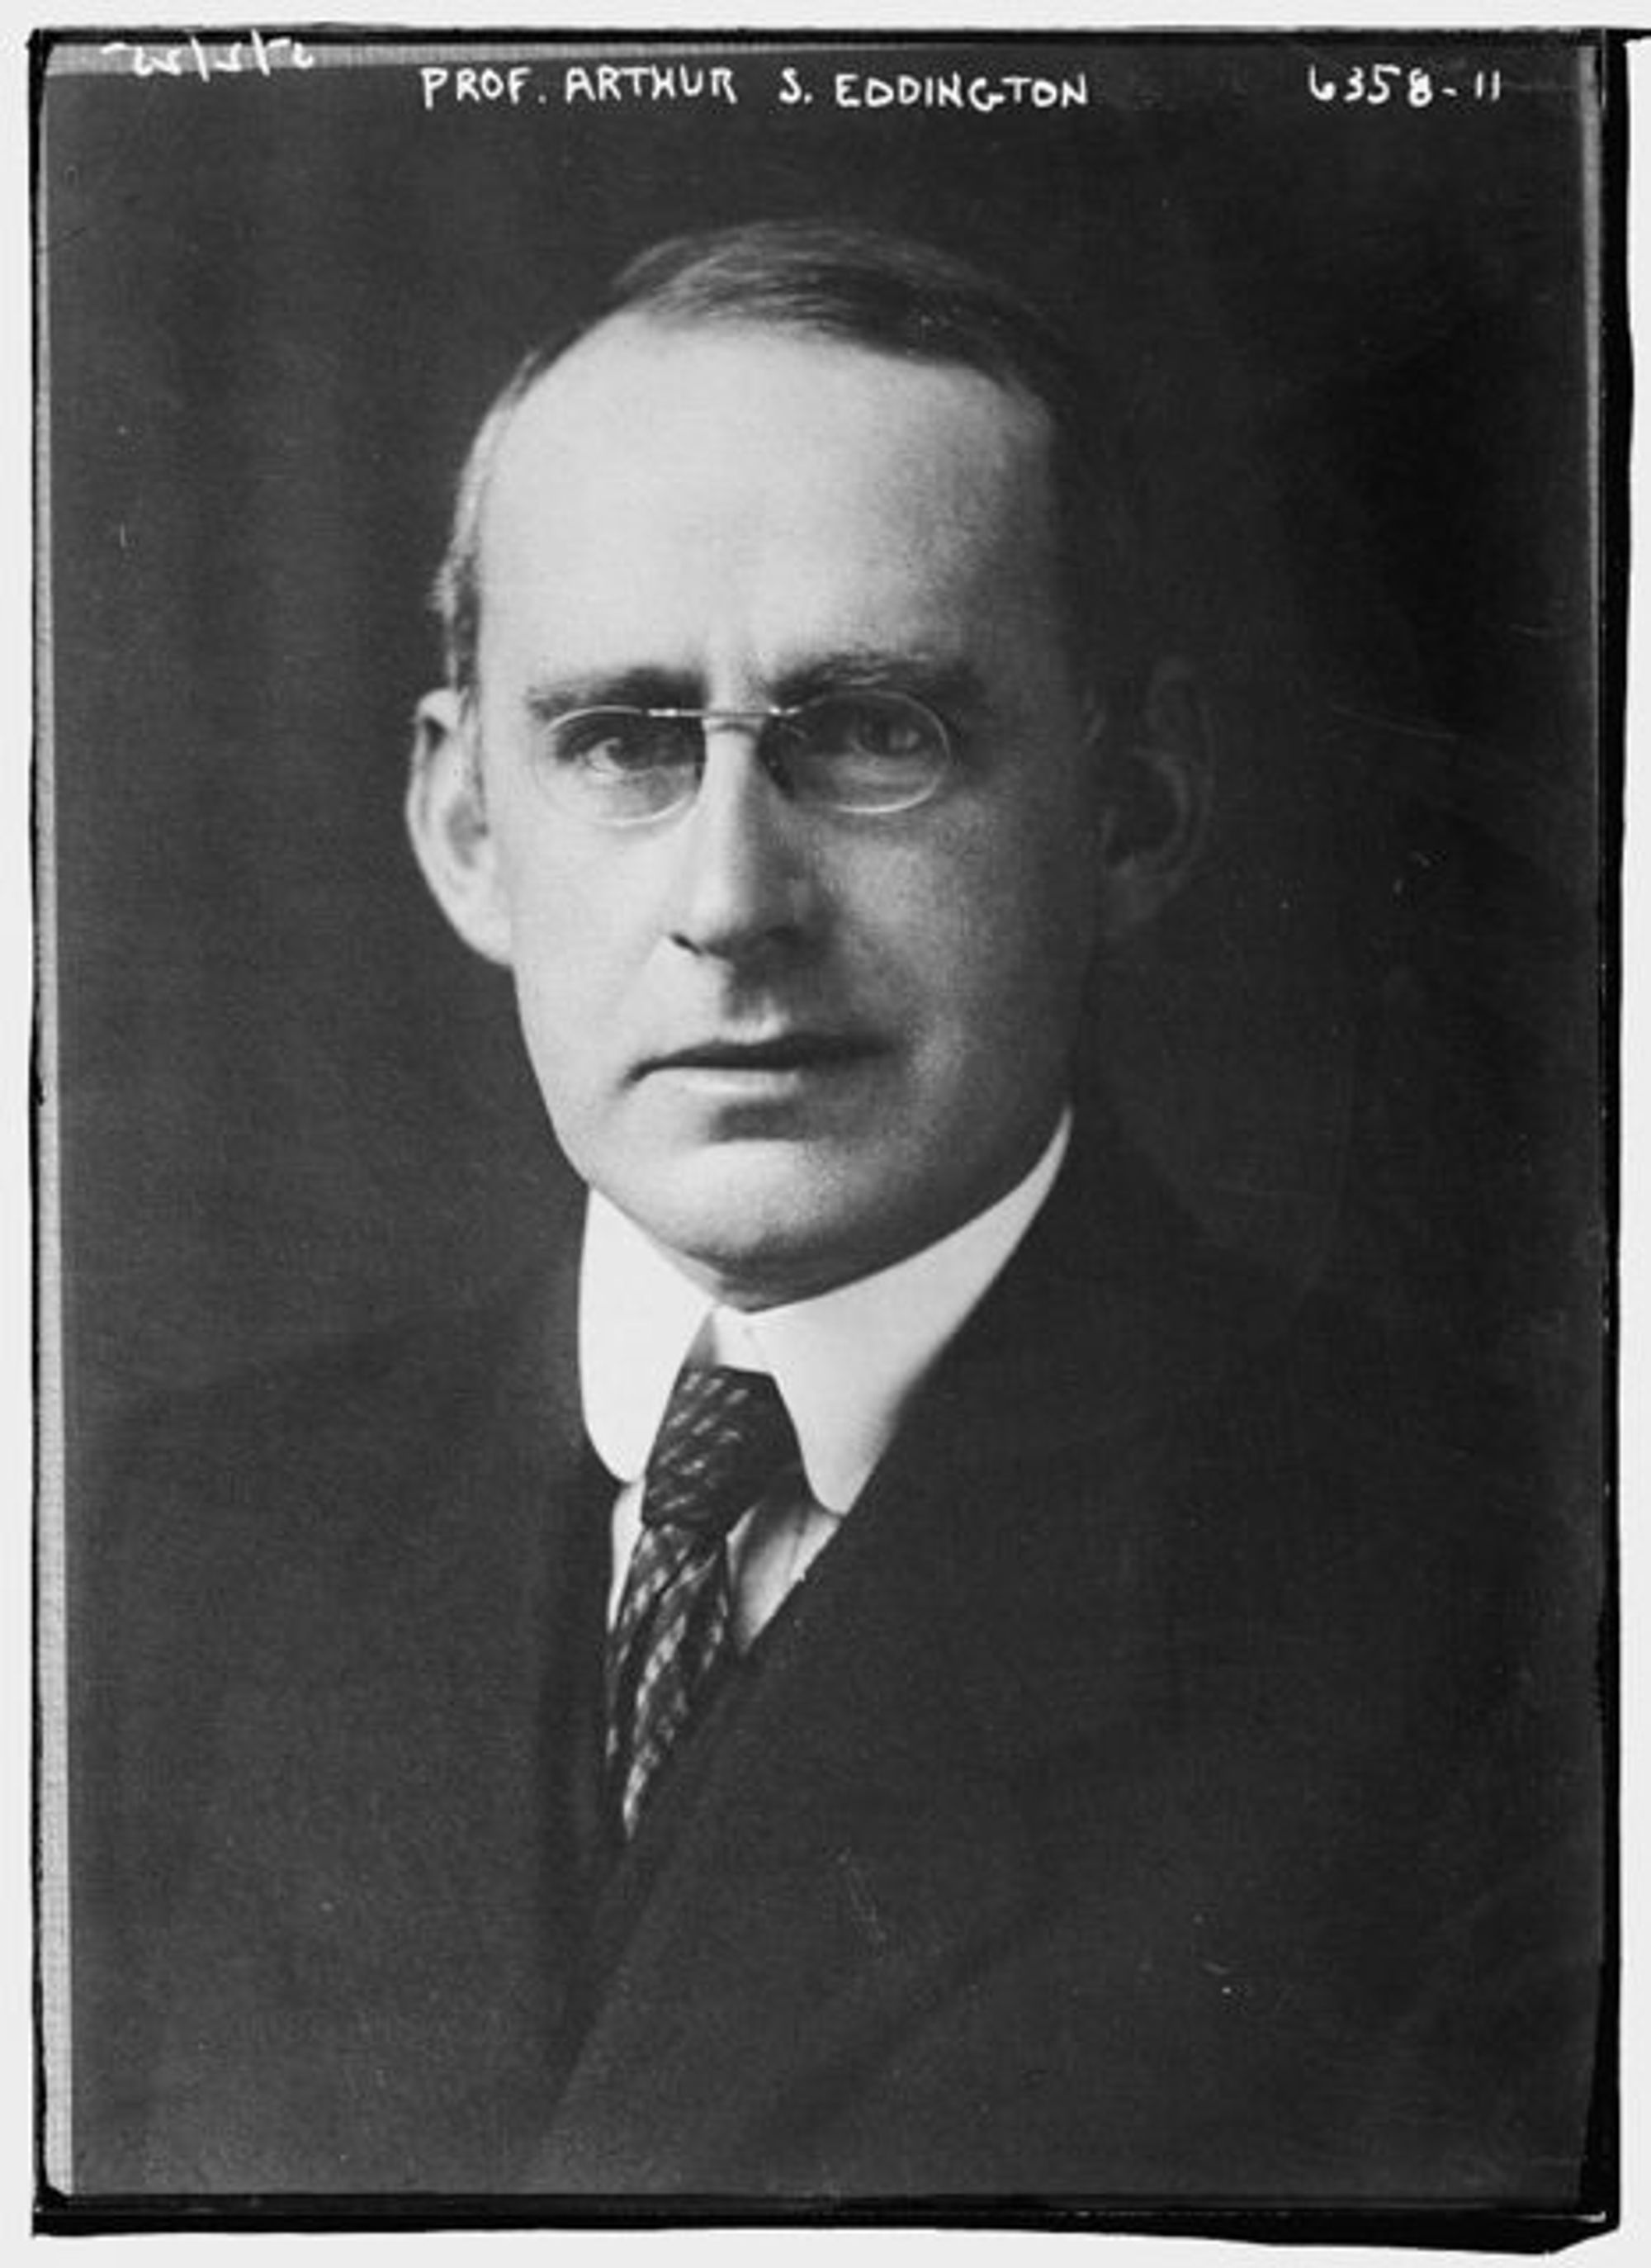 A portrait of a caucasian male wearing glasses